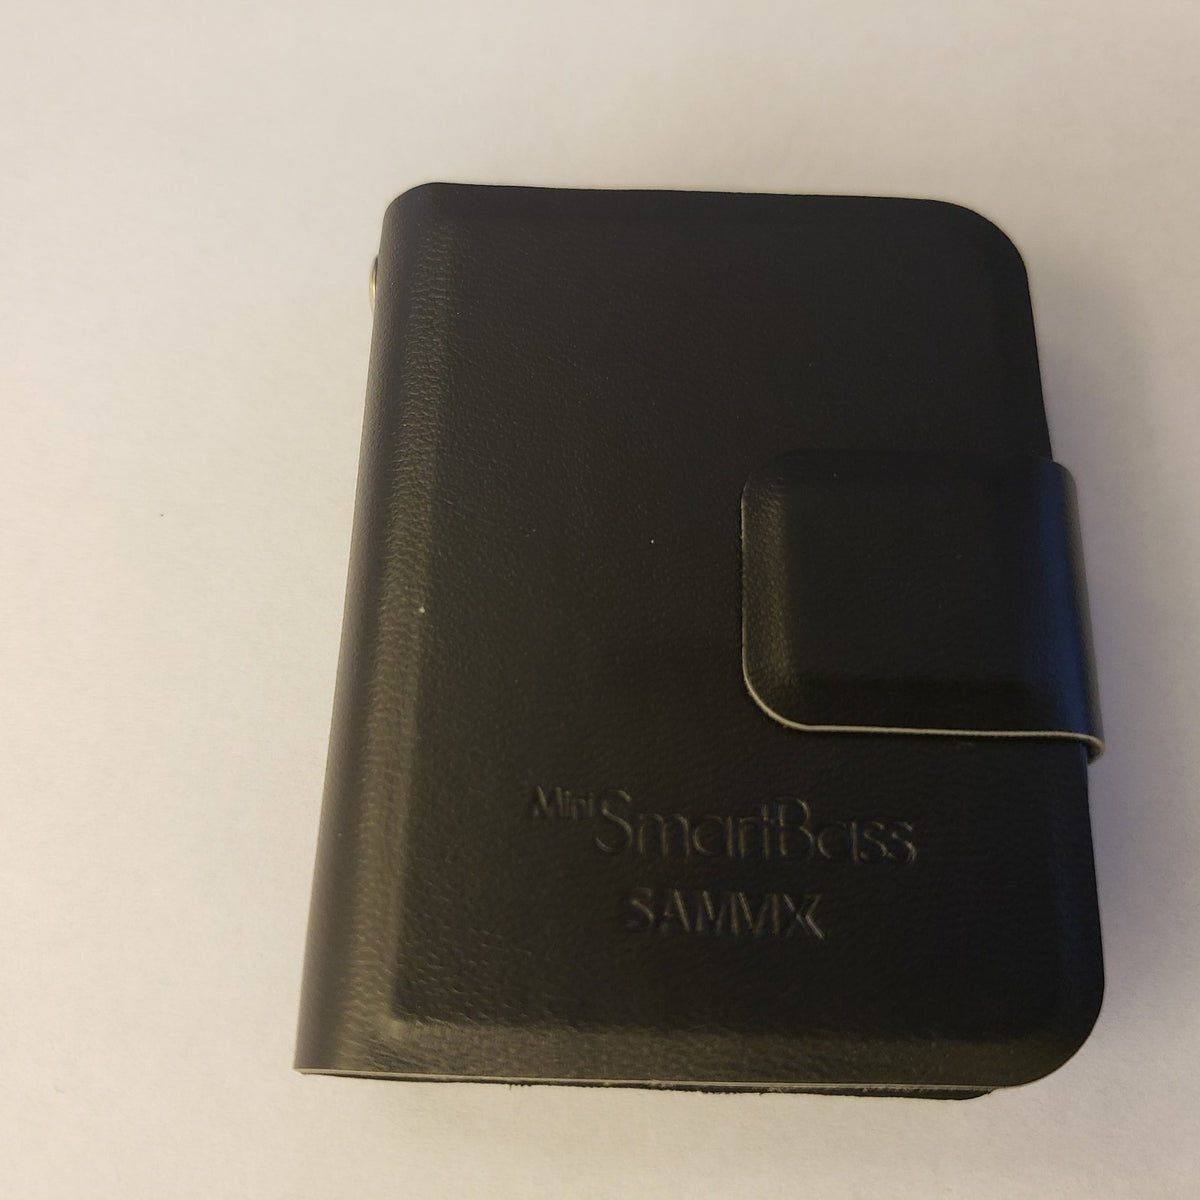 Samvix Mini Smartbass Leather Protective Case, Black